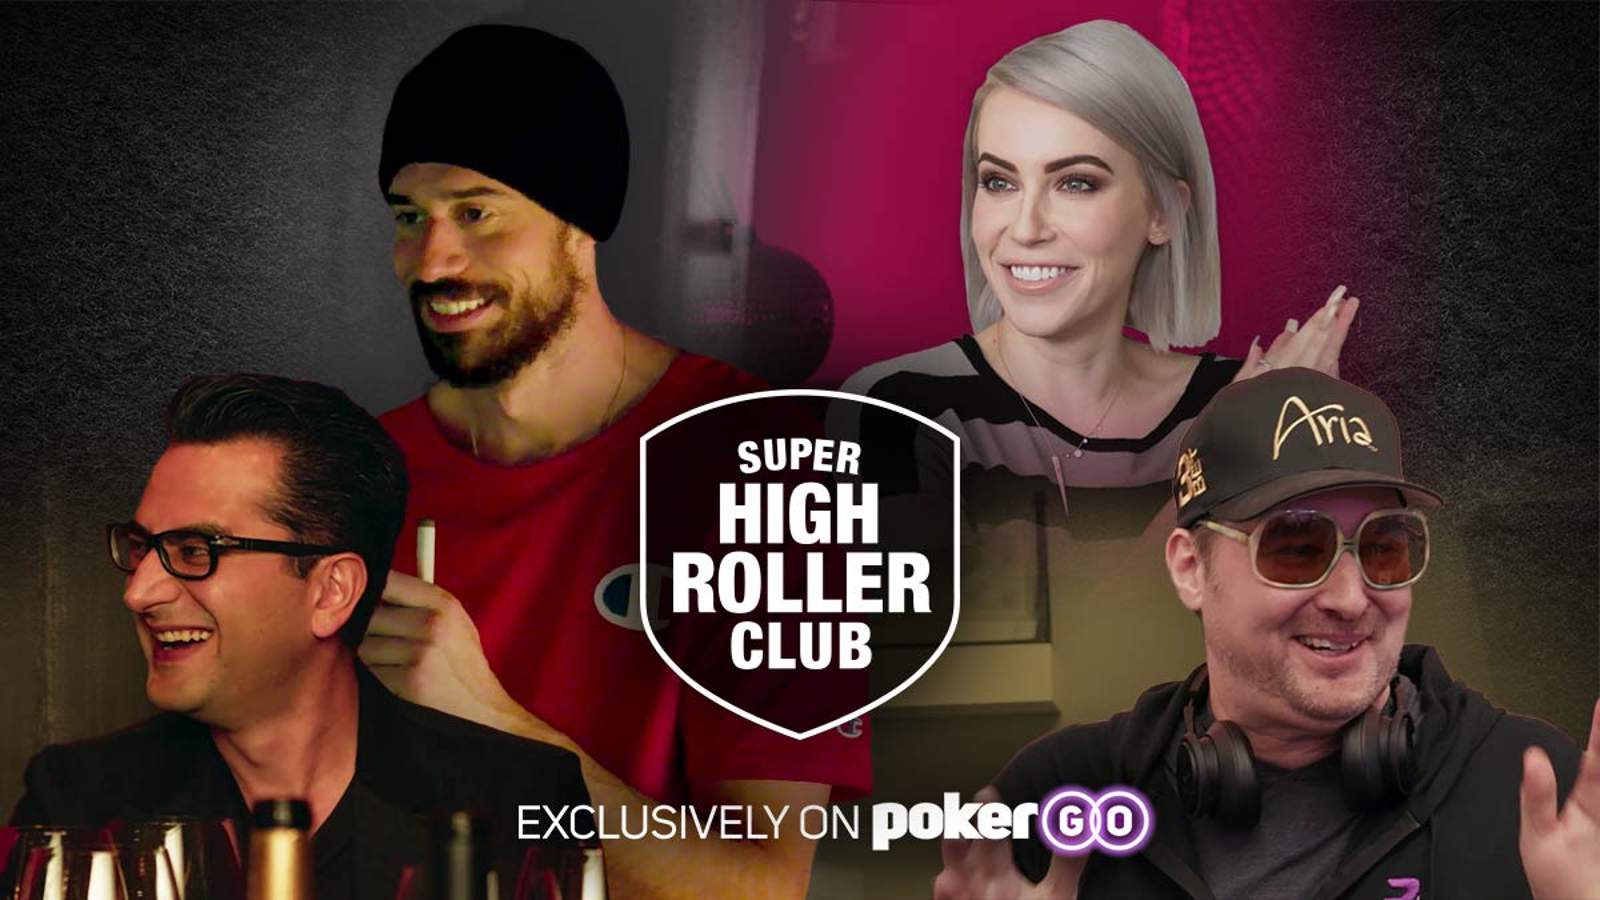 "Super High Roller Club" Live on PokerGO